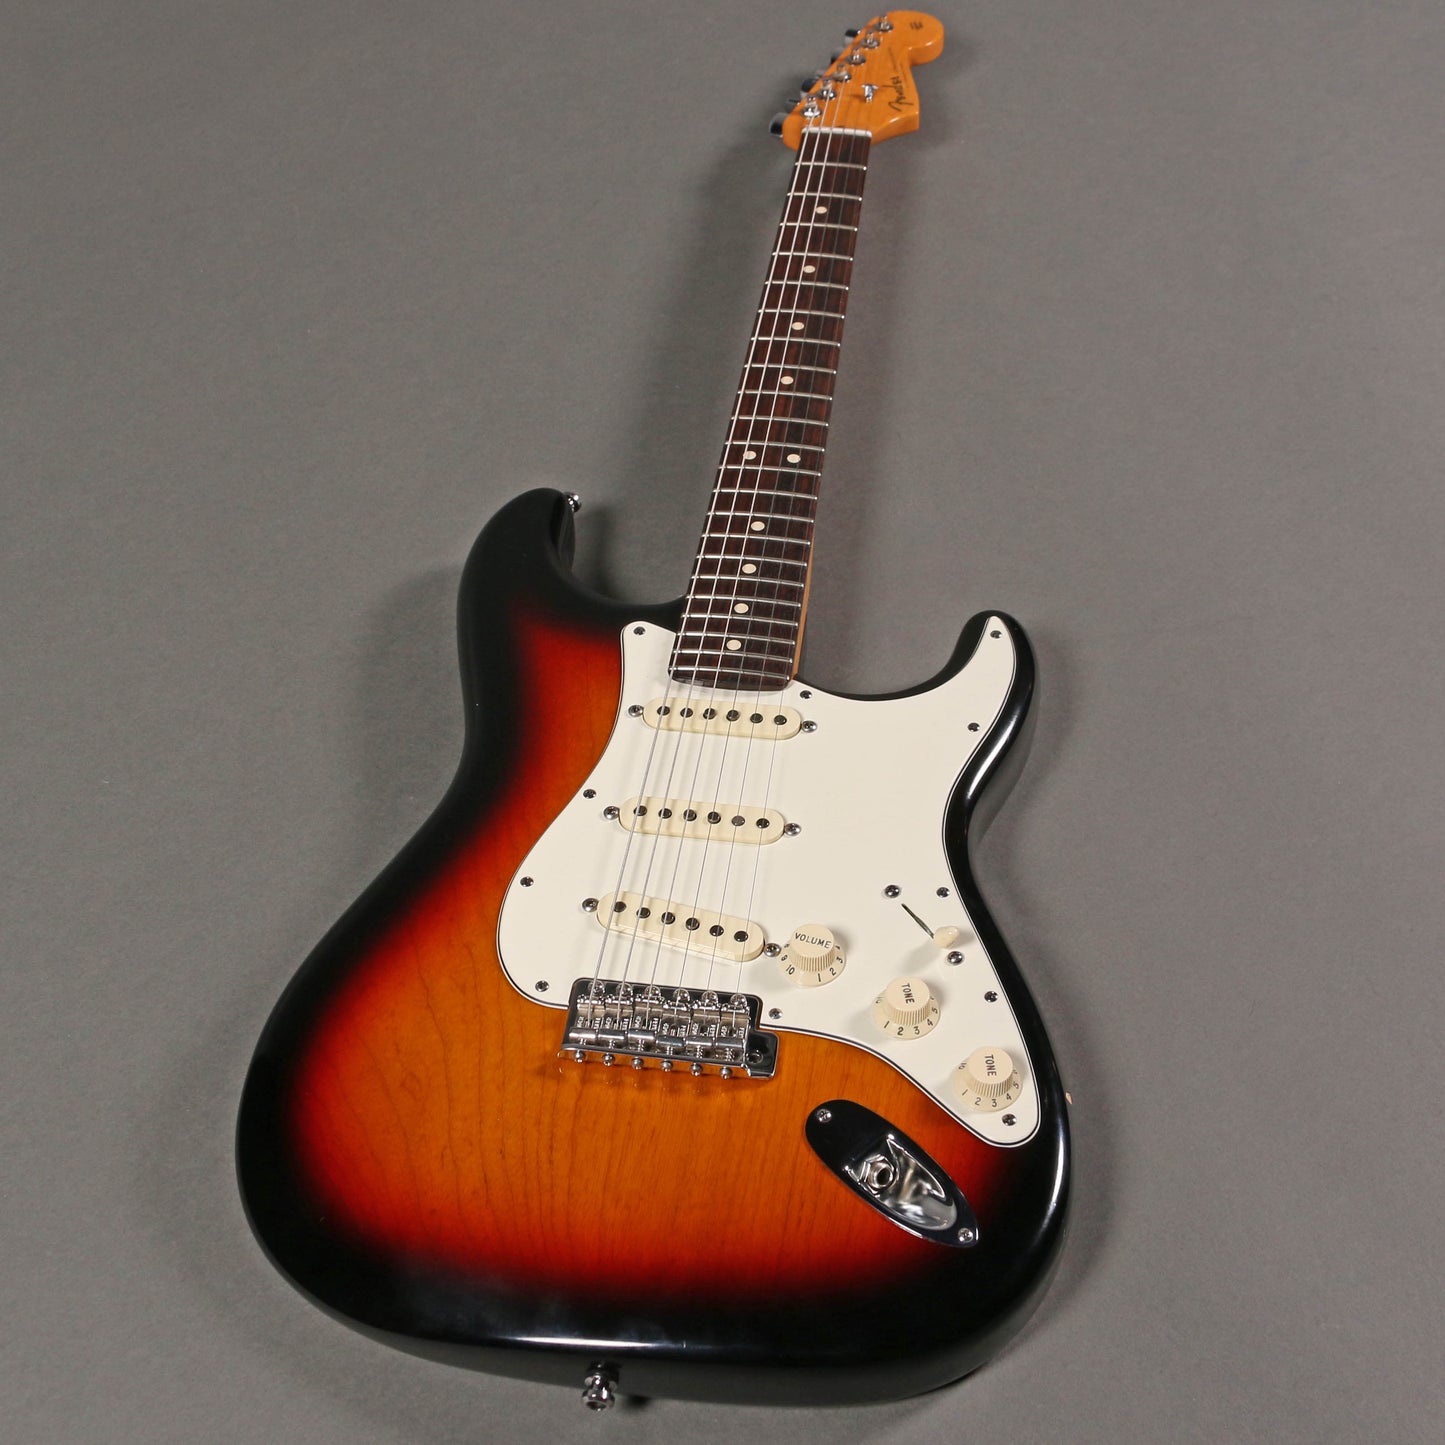 2012 Fender Custom Shop Custom Classic Stratocaster